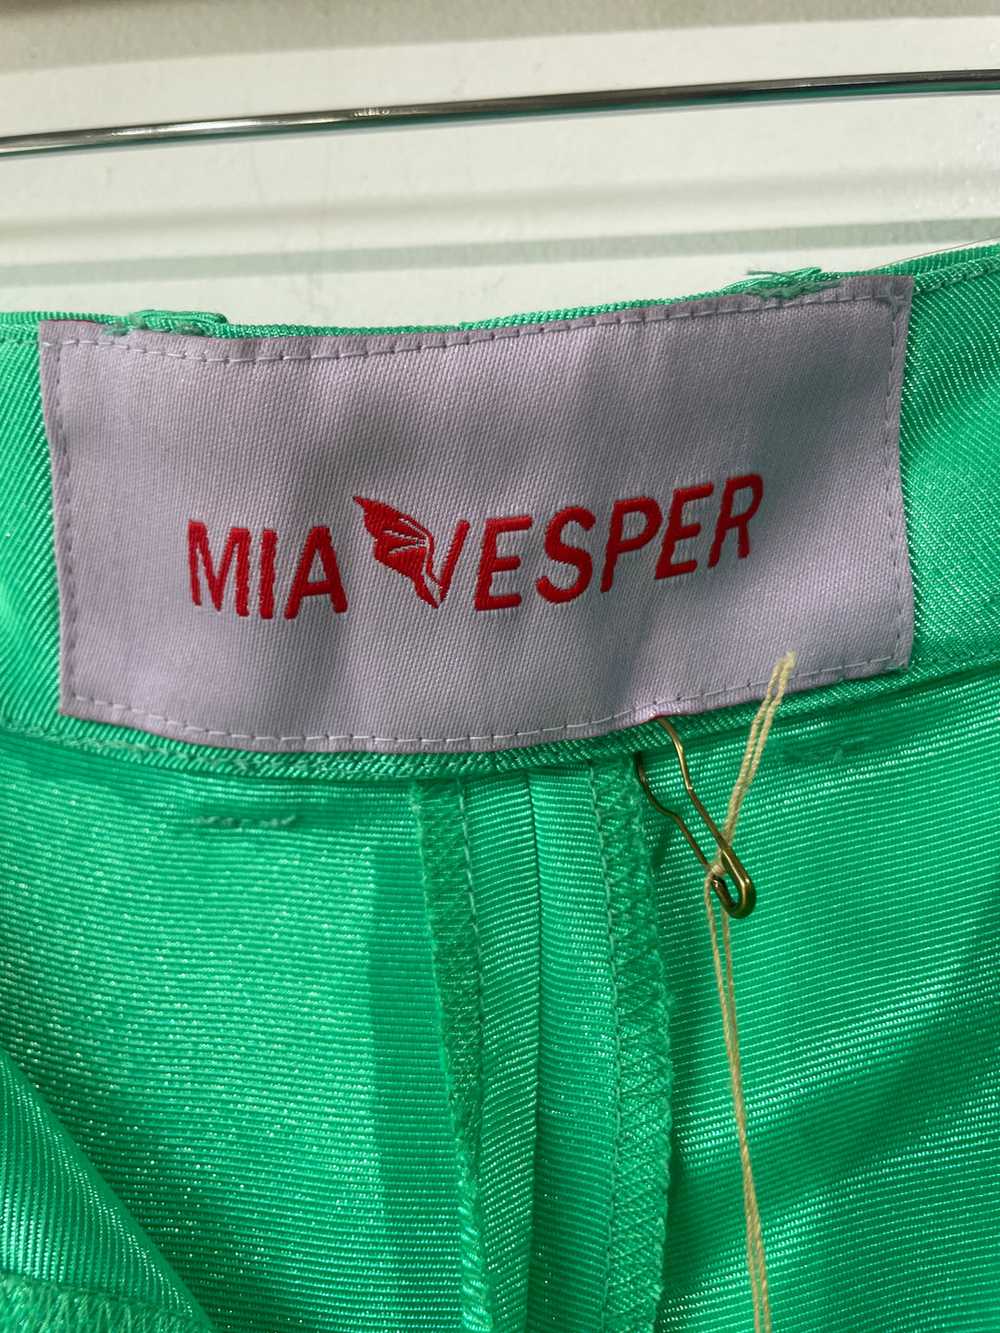 Mia Vesper Shiny Green Trousers - image 3